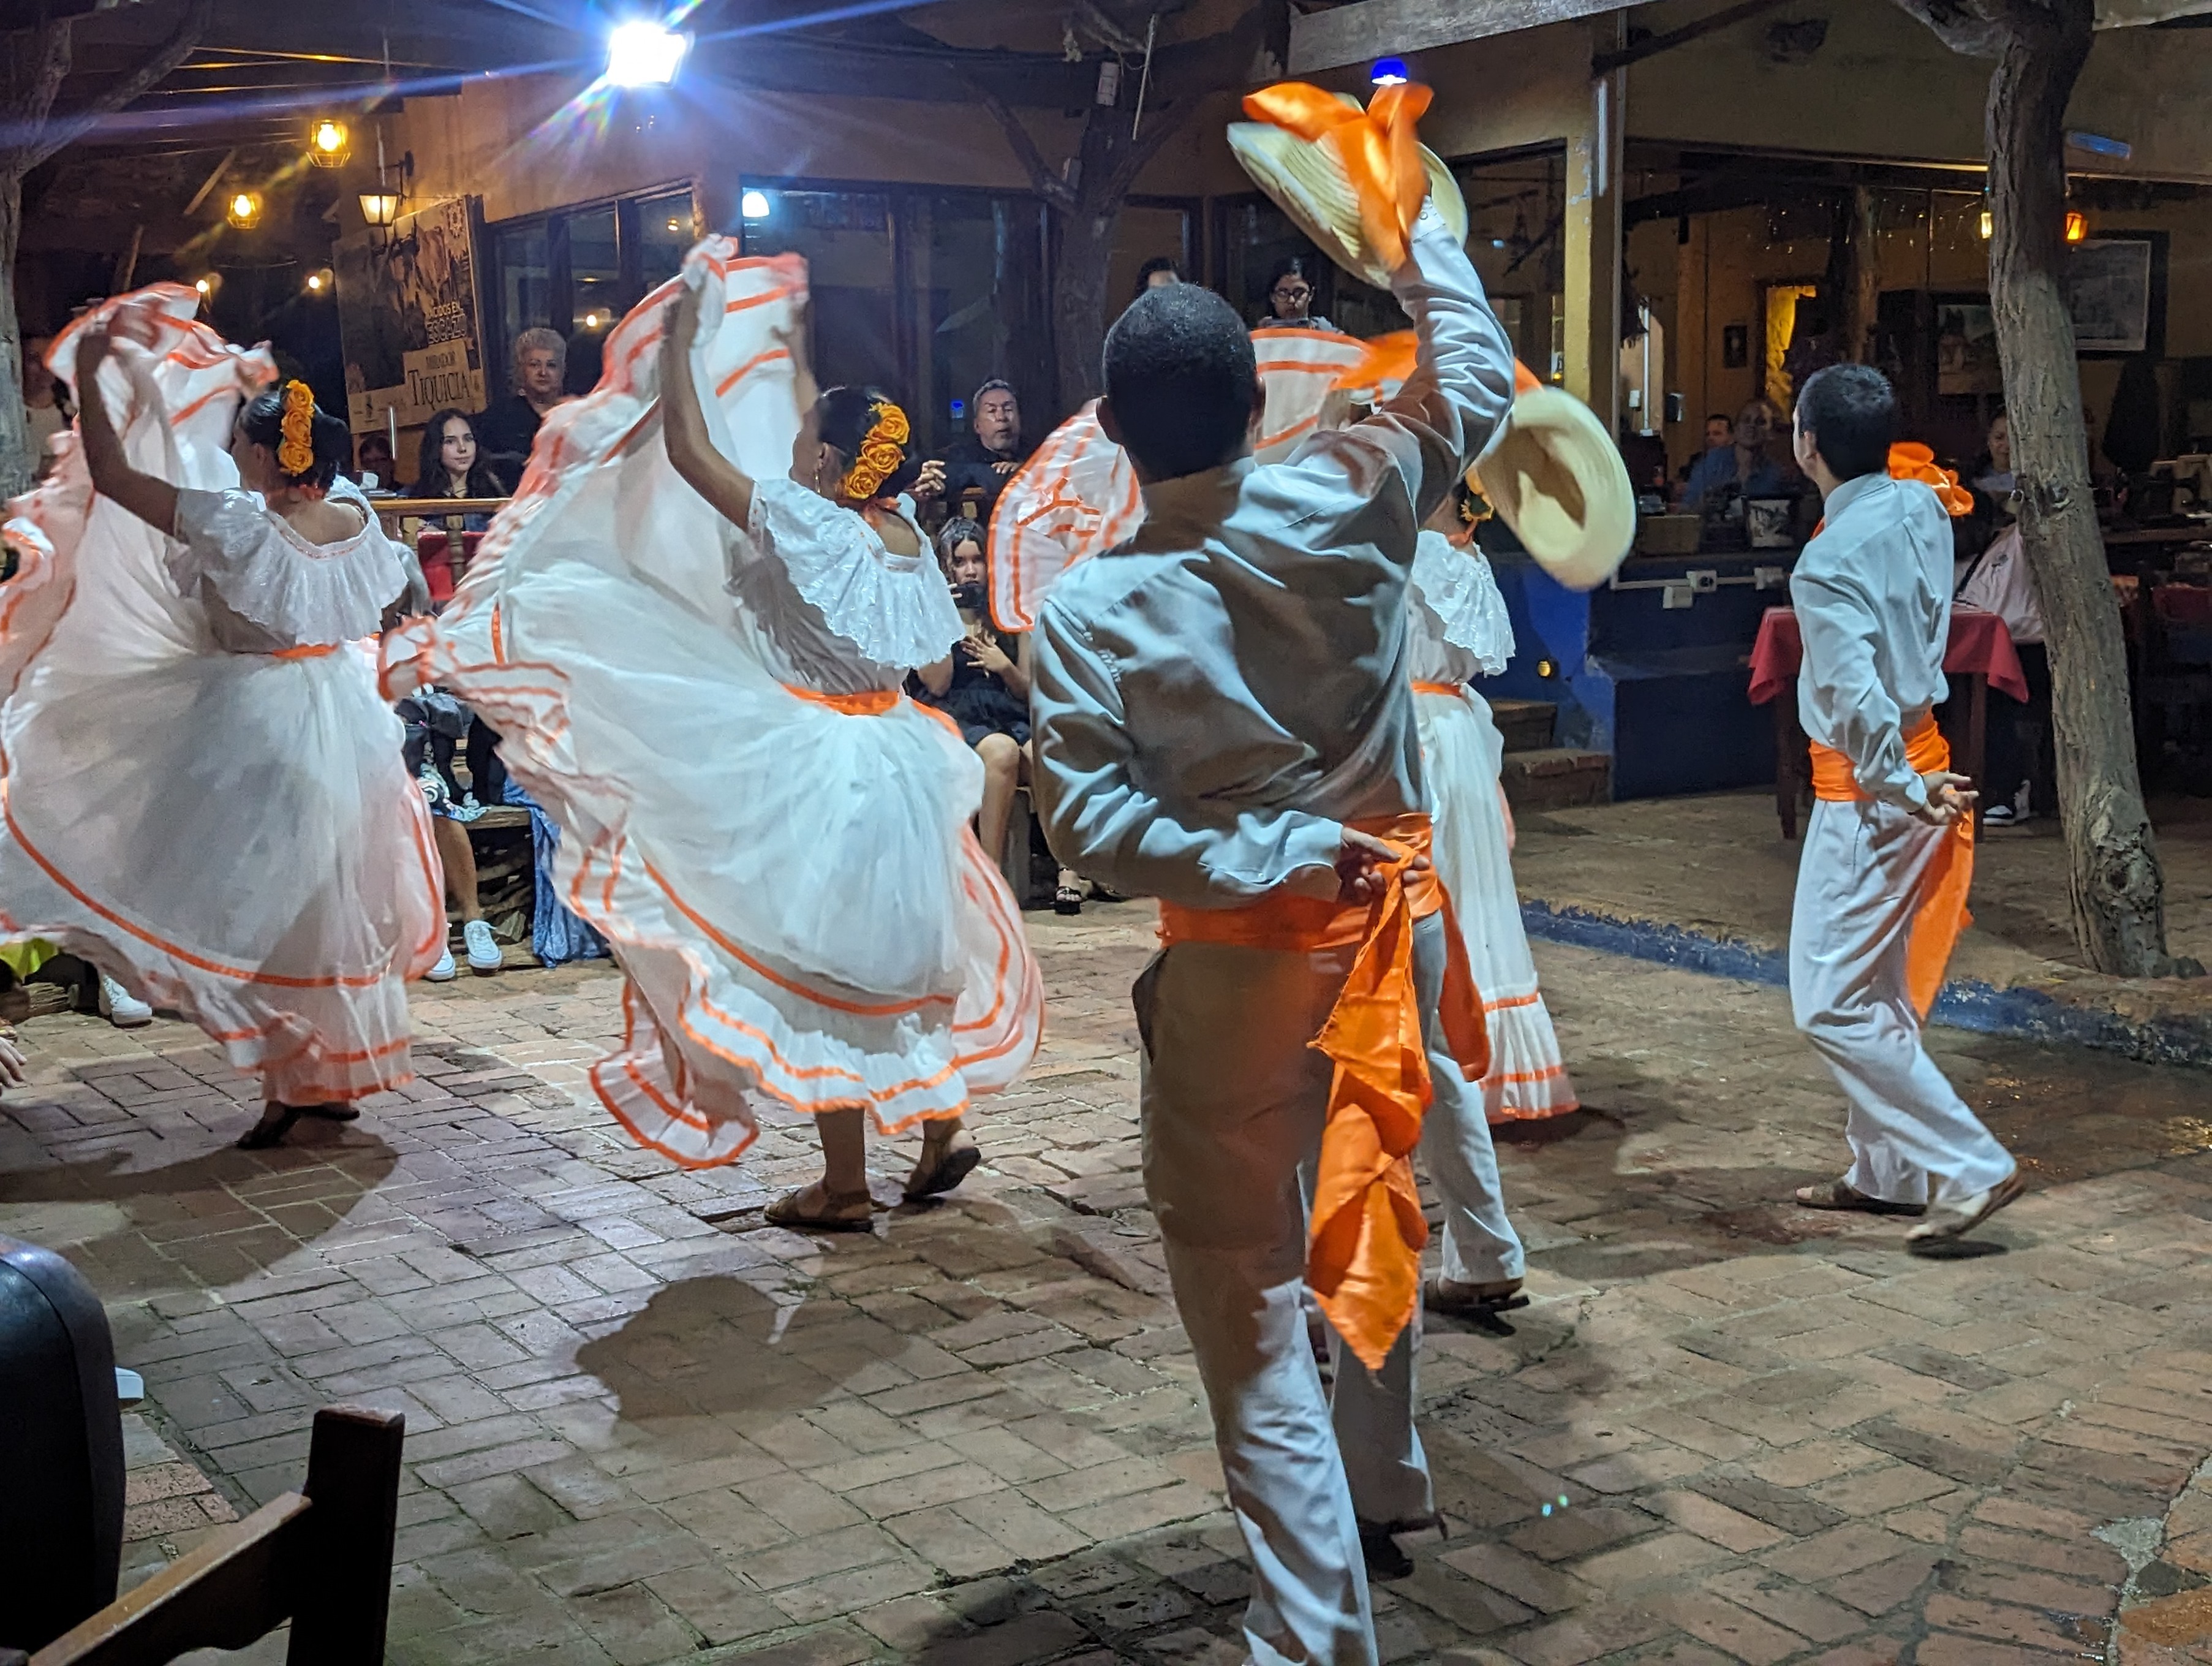 Folklorio dancers